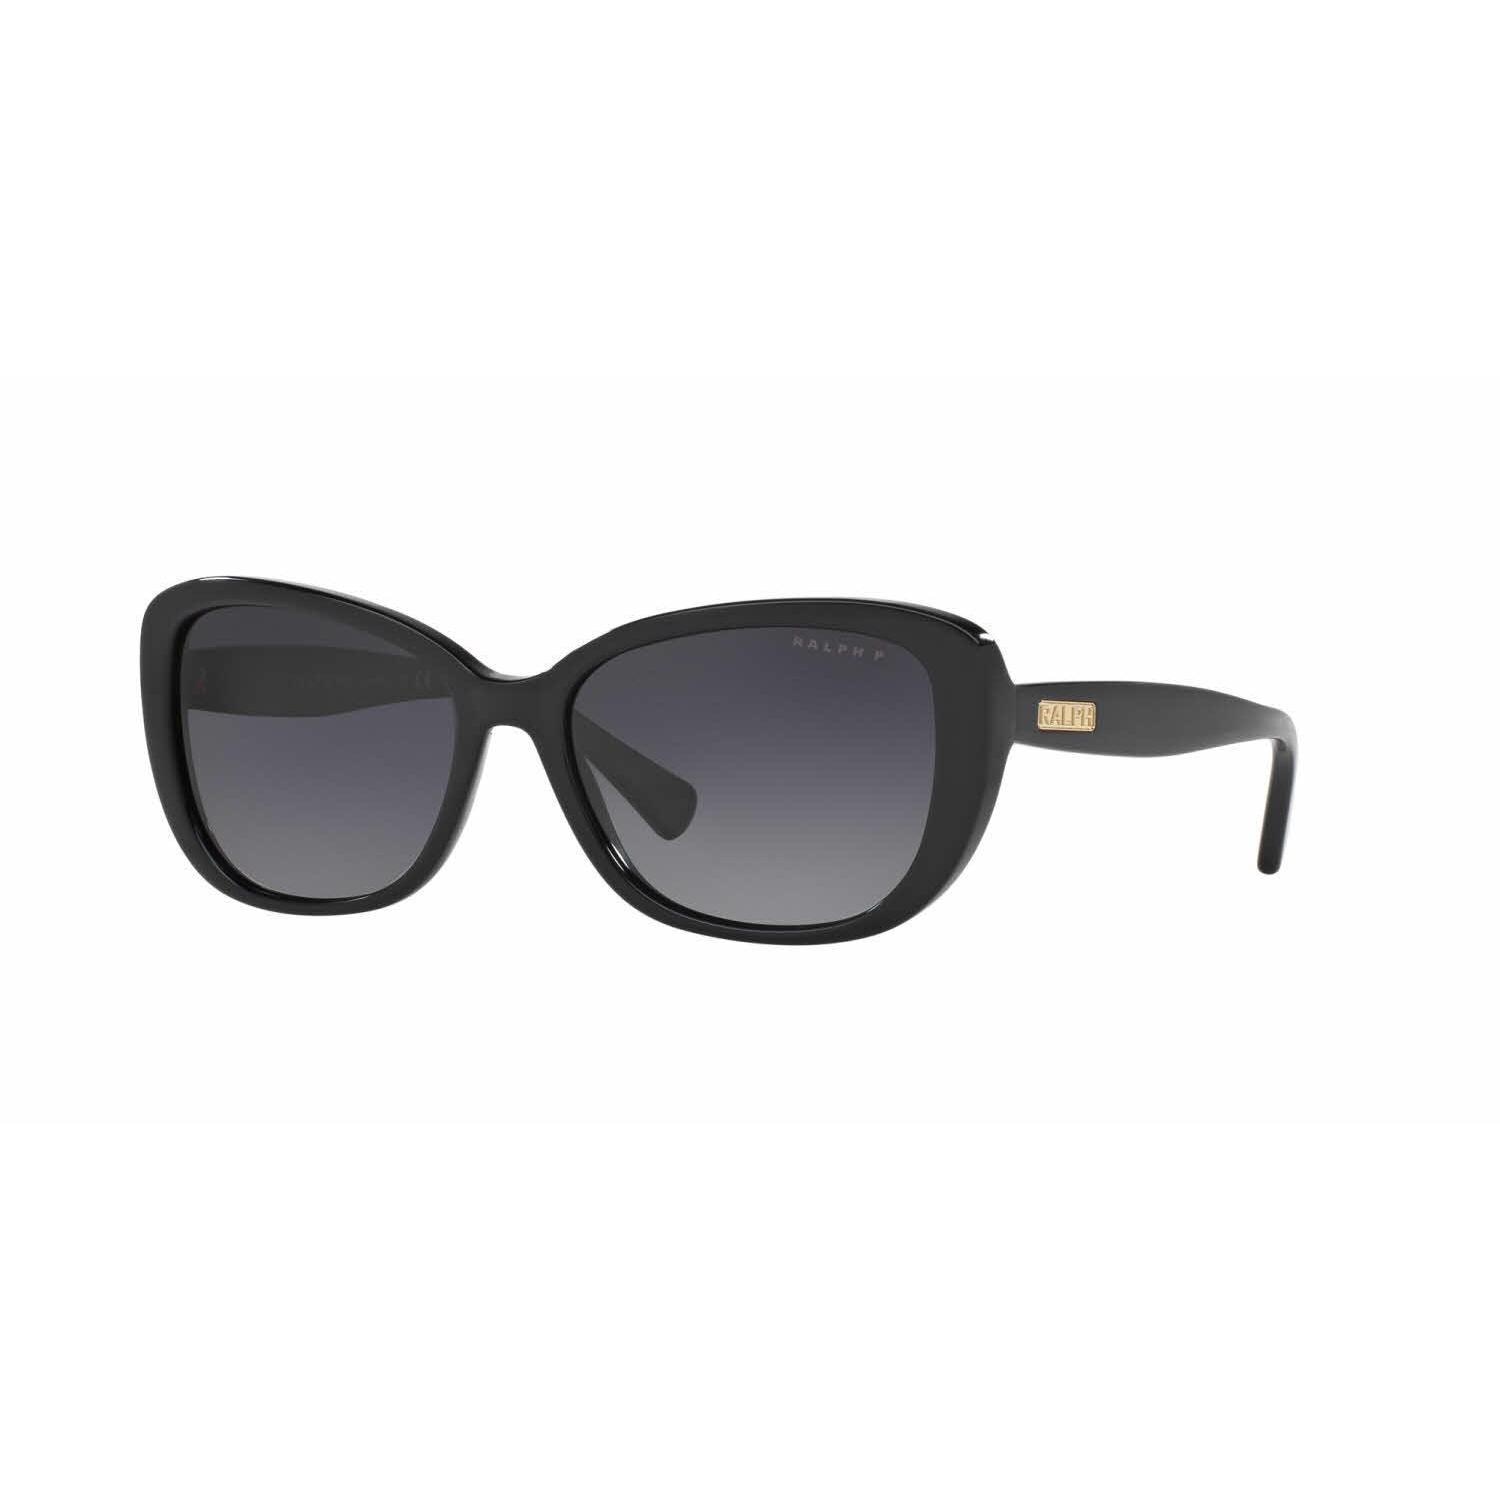 Ralph Lauren Women's 0RA5215 Polarized Rectangular Sunglasses, Black & Grey, 57 mm - image 2 of 2